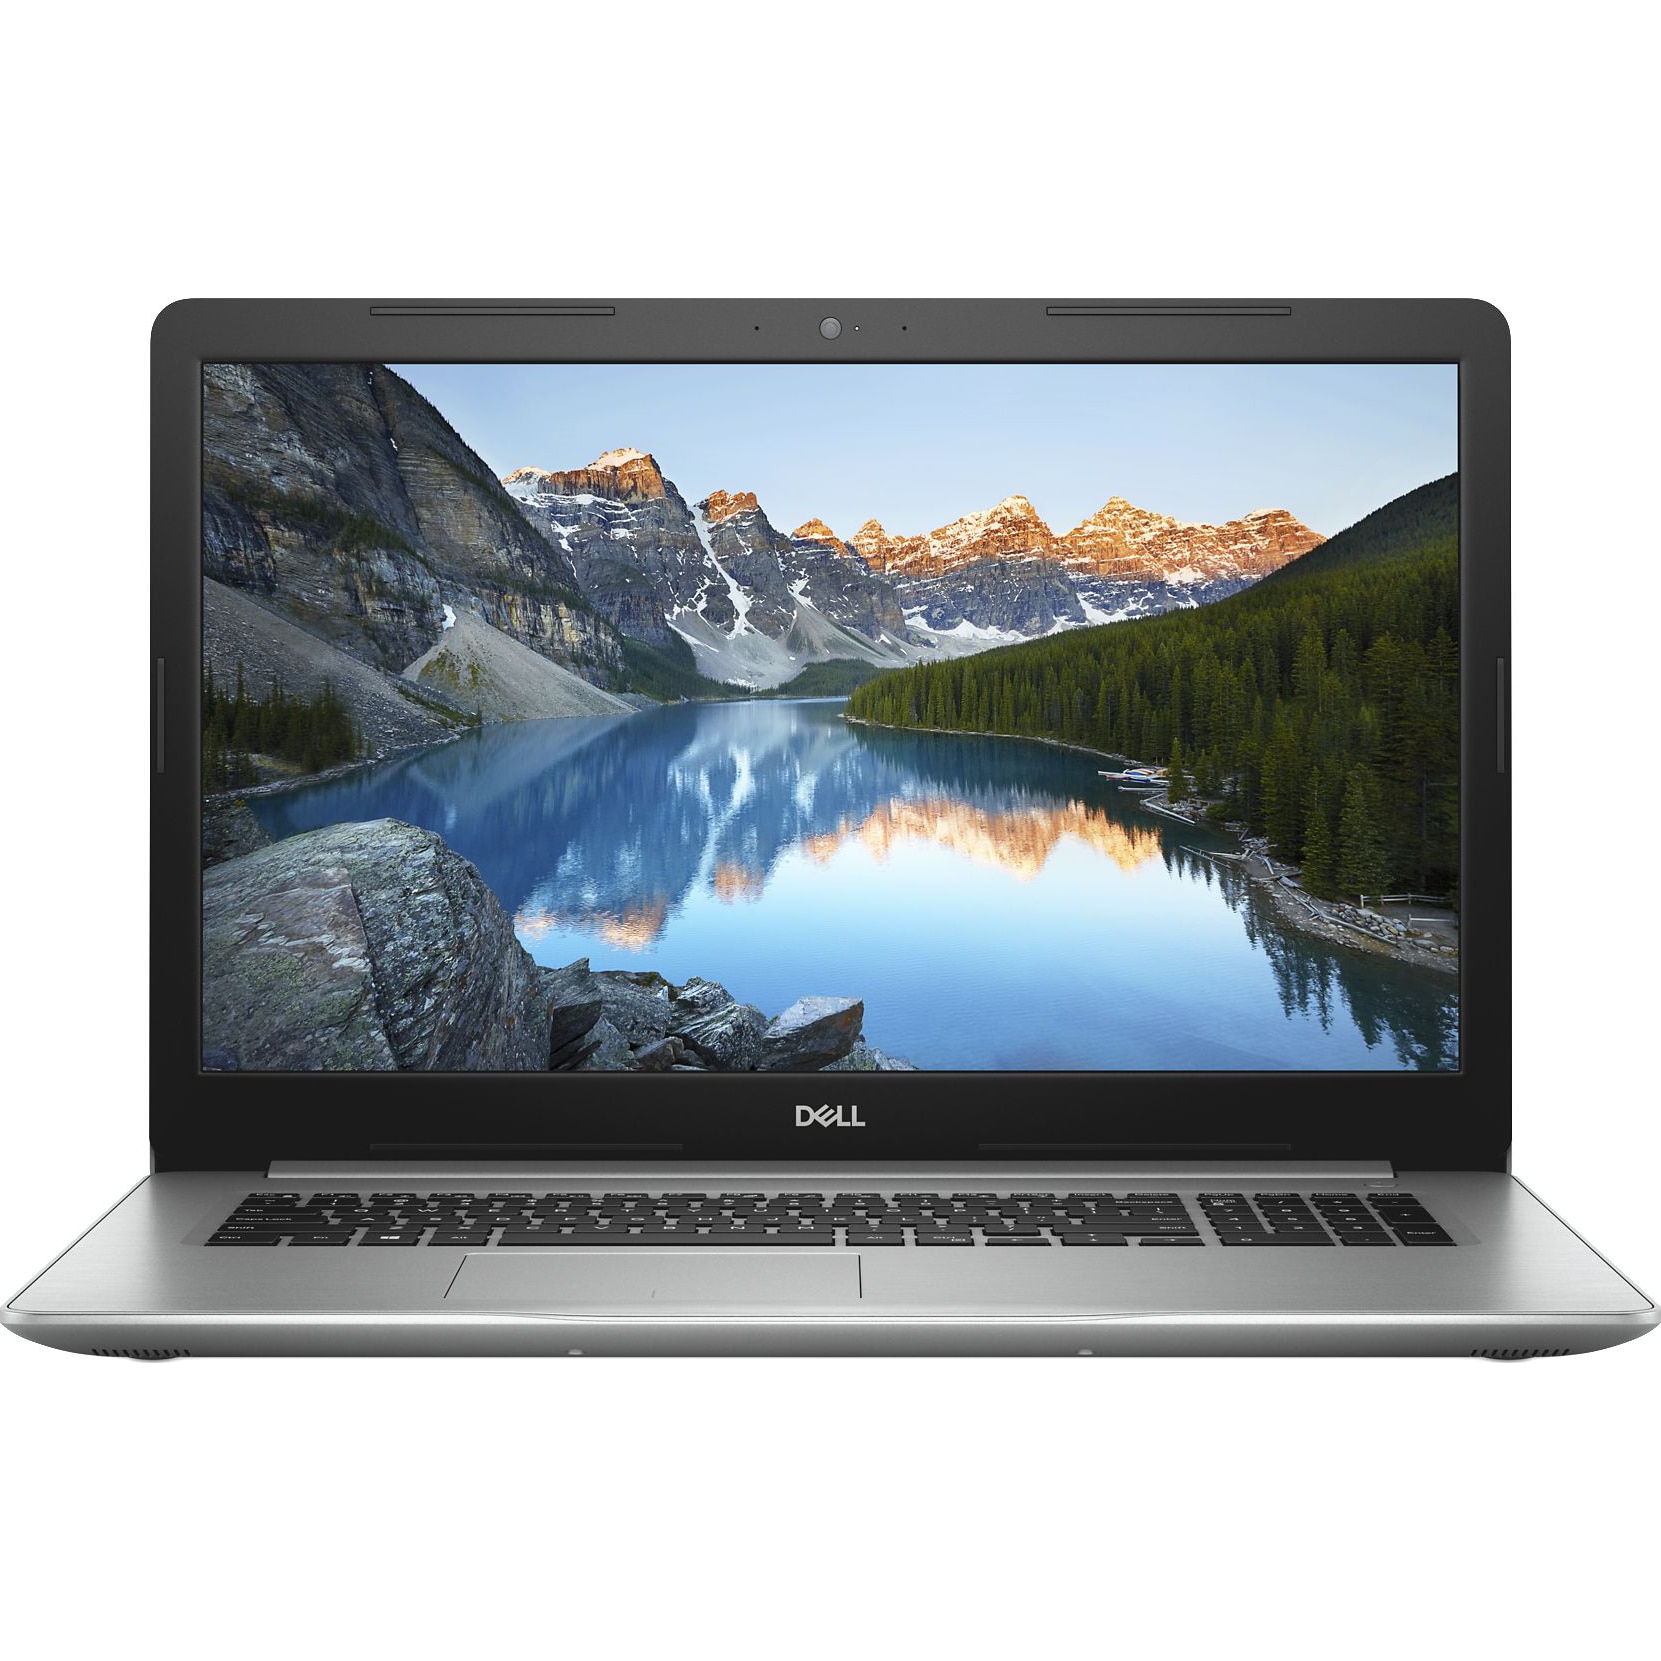 gripă Europa Cal  Laptop Dell Inspiron 5770 cu procesor Intel® Core™ i5-8250U pana la 3.40  GHz, Kaby Lake R, 17.3", Full HD, 8GB, 1TB + 128GB SSD, AMD Radeon 530 4GB,  FPR, Linux, Silver - eMAG.ro